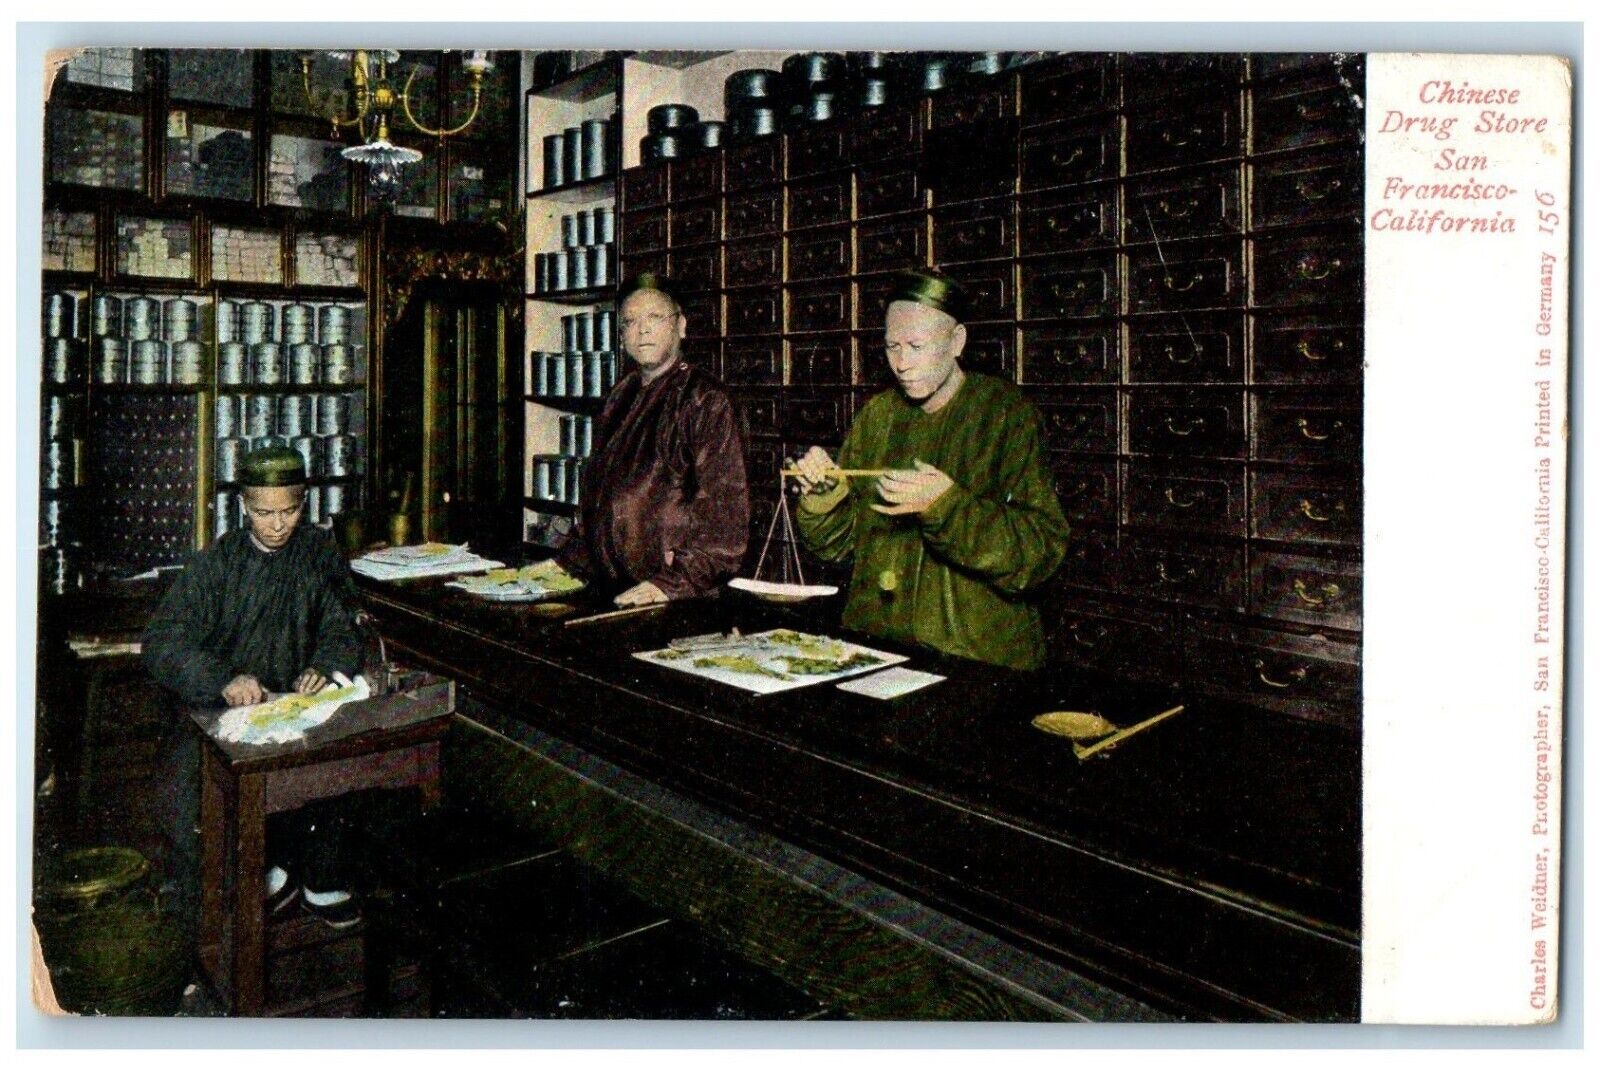 c1905 Interior Chinese Drug Store San Francisco California CA Vintage Postcard